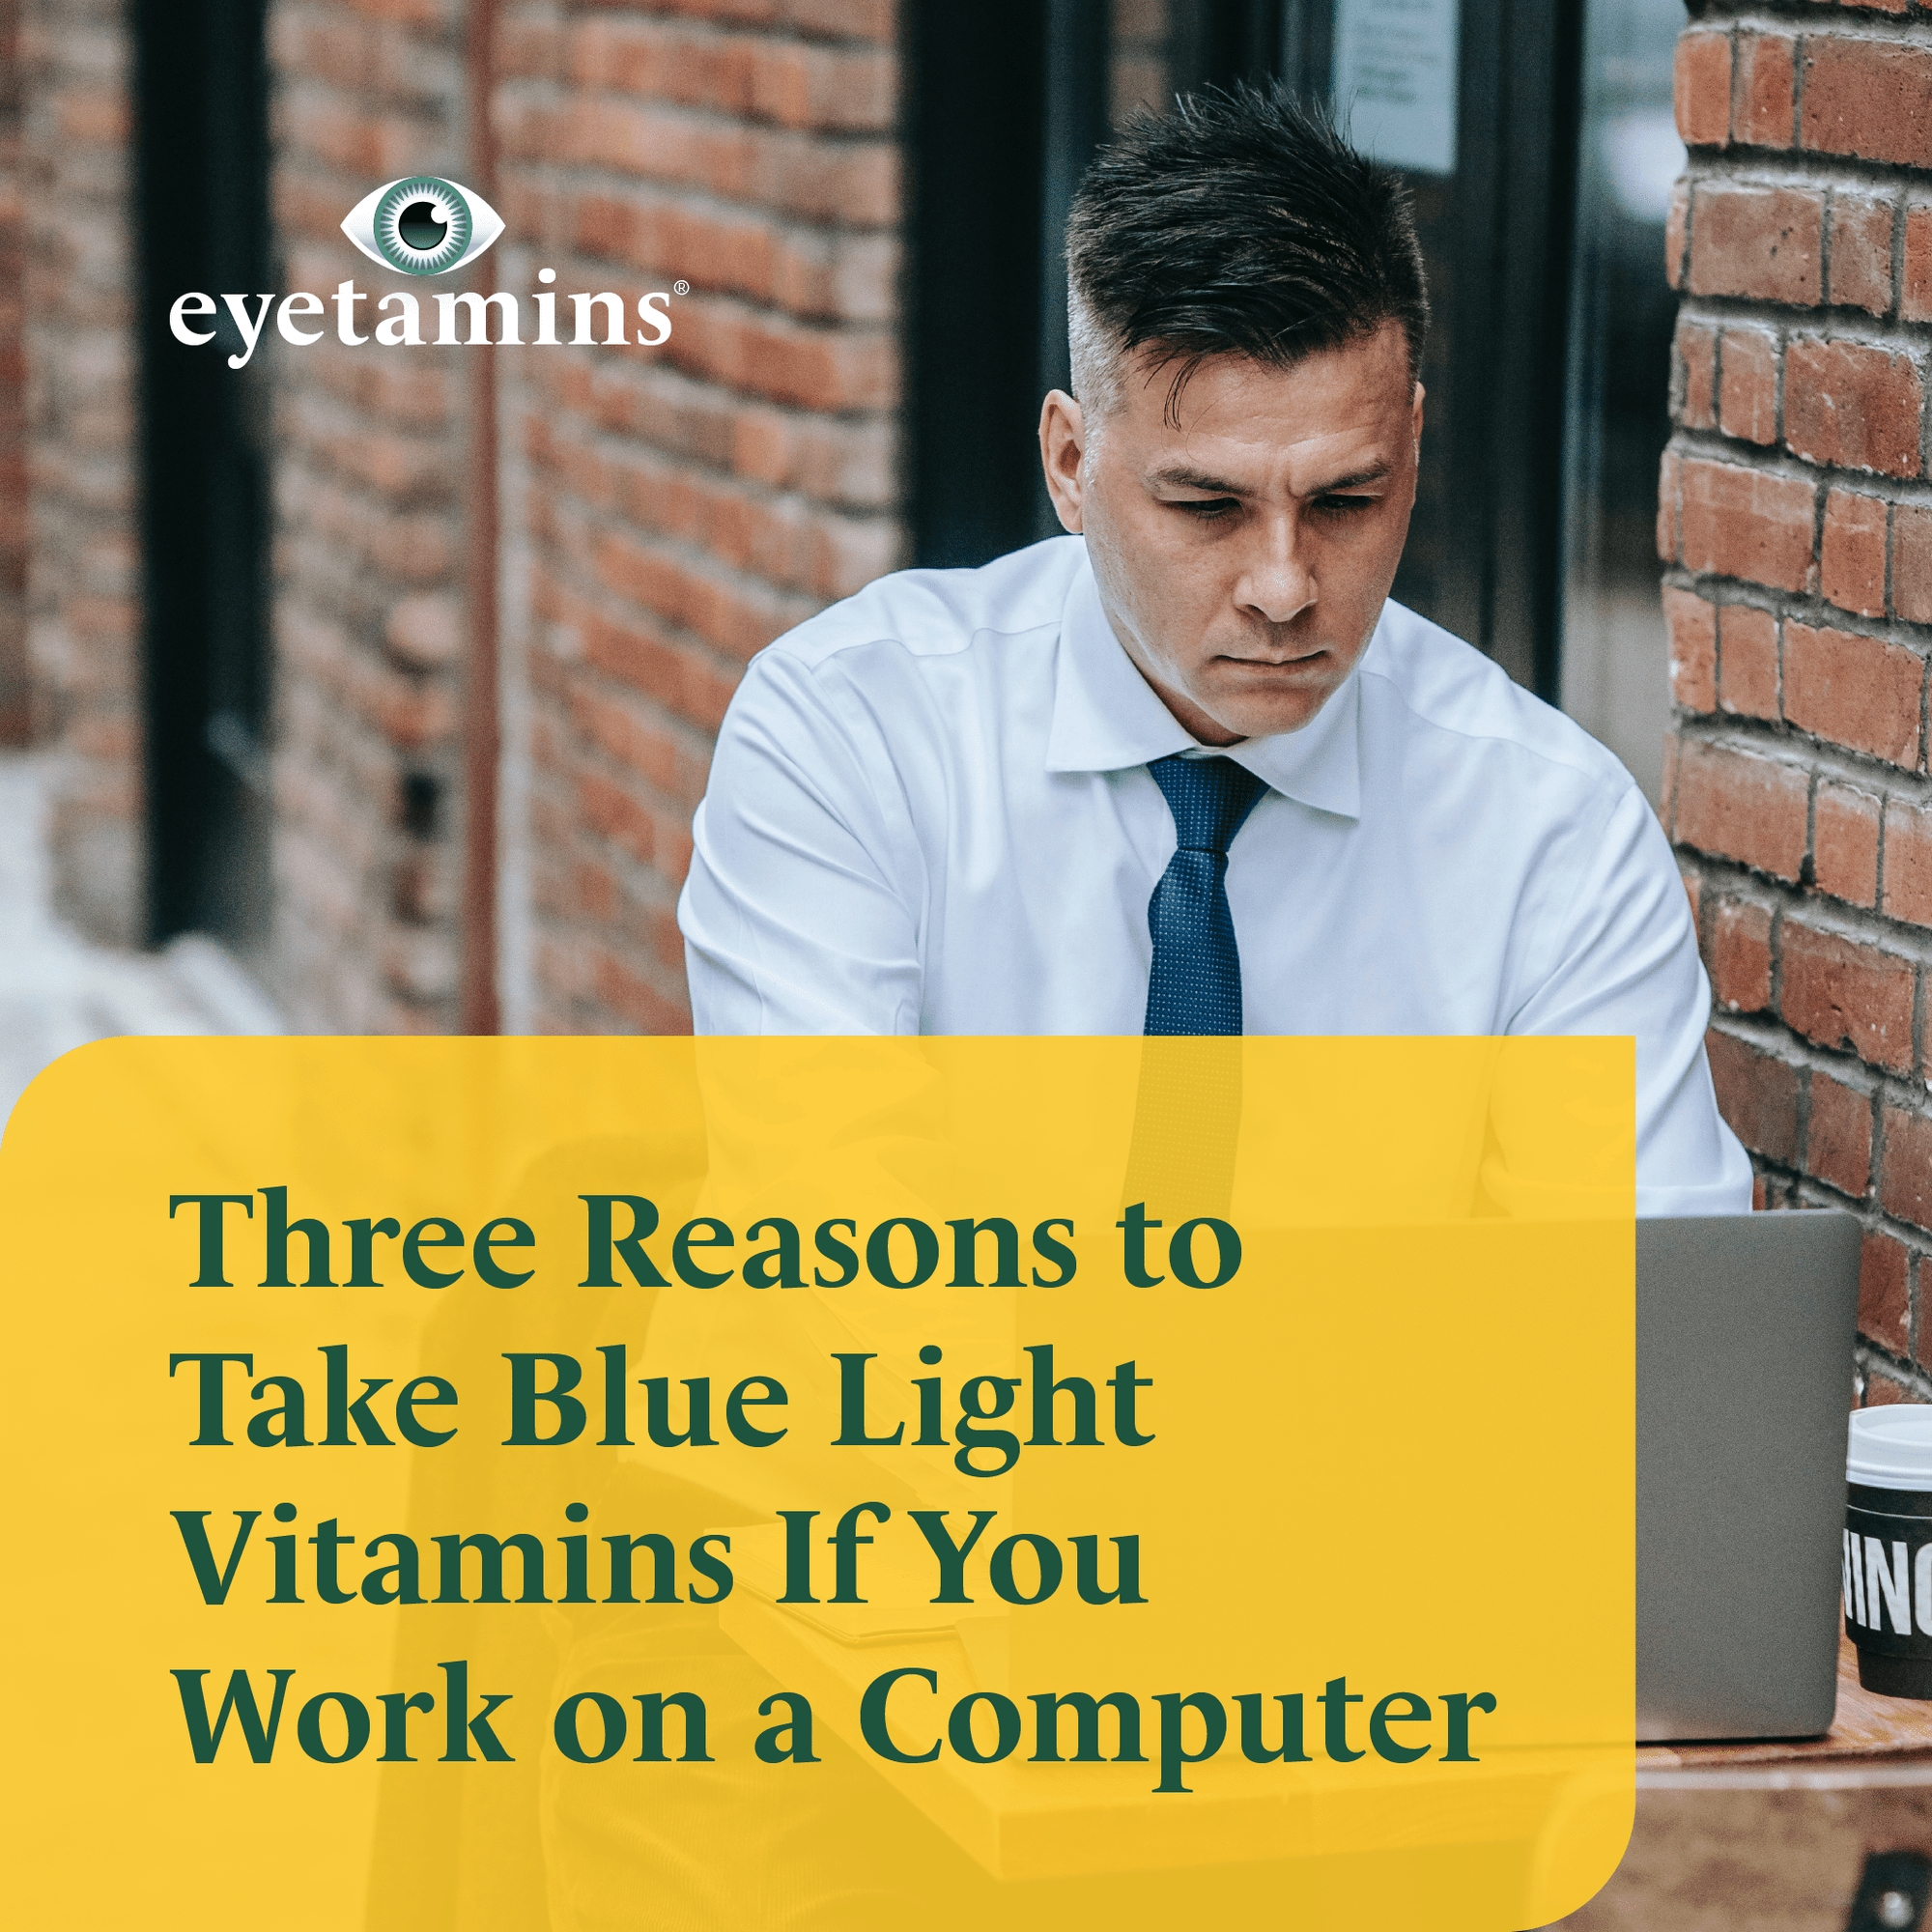 Eyetamins - Three Reasons to Take Blue Light Vitamins If You Work on a Computer